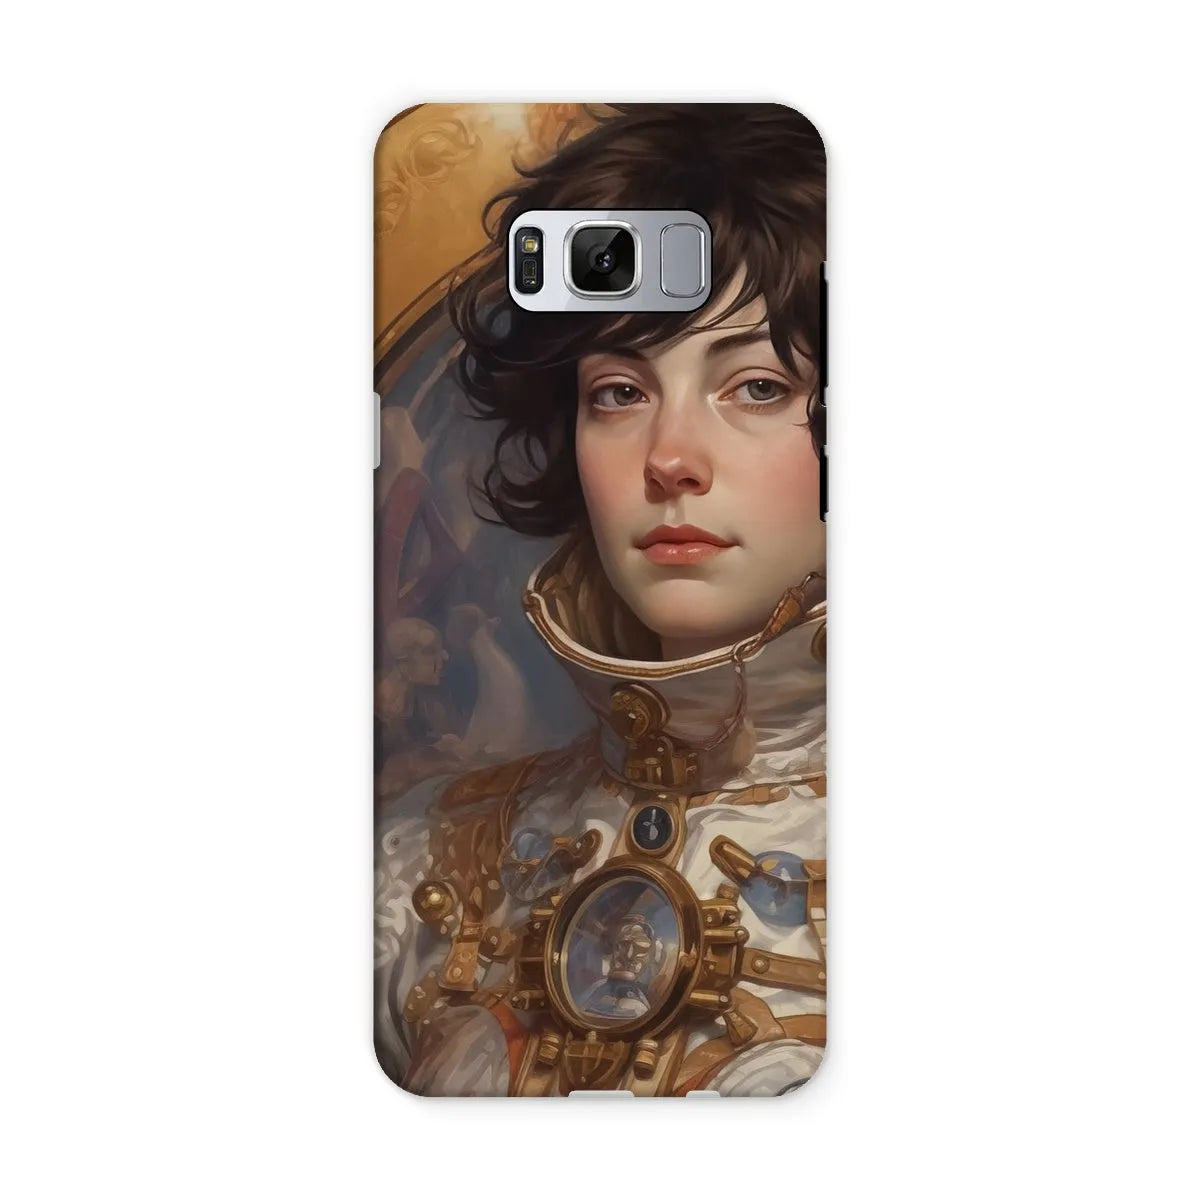 Chloé The Lesbian Astronaut - Space Aesthetic Art Phone Case - Samsung Galaxy S8 / Matte - Mobile Phone Cases